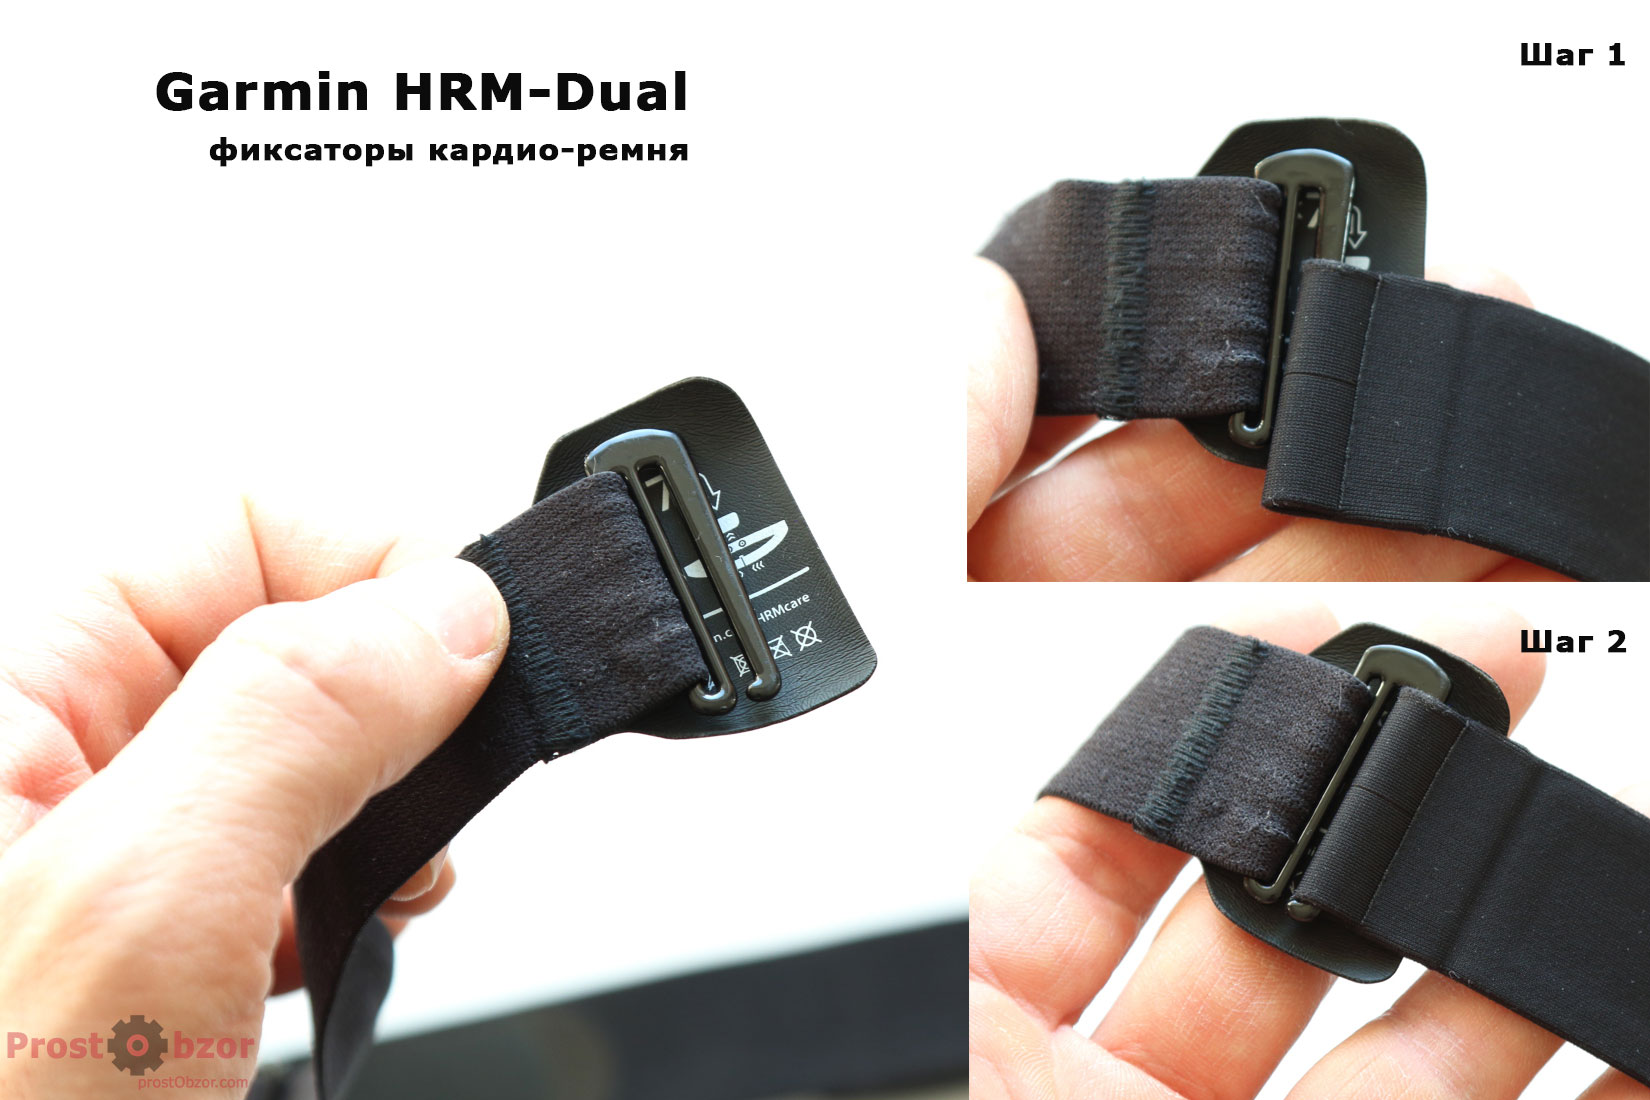 Men's, Garmin HRM-Dual